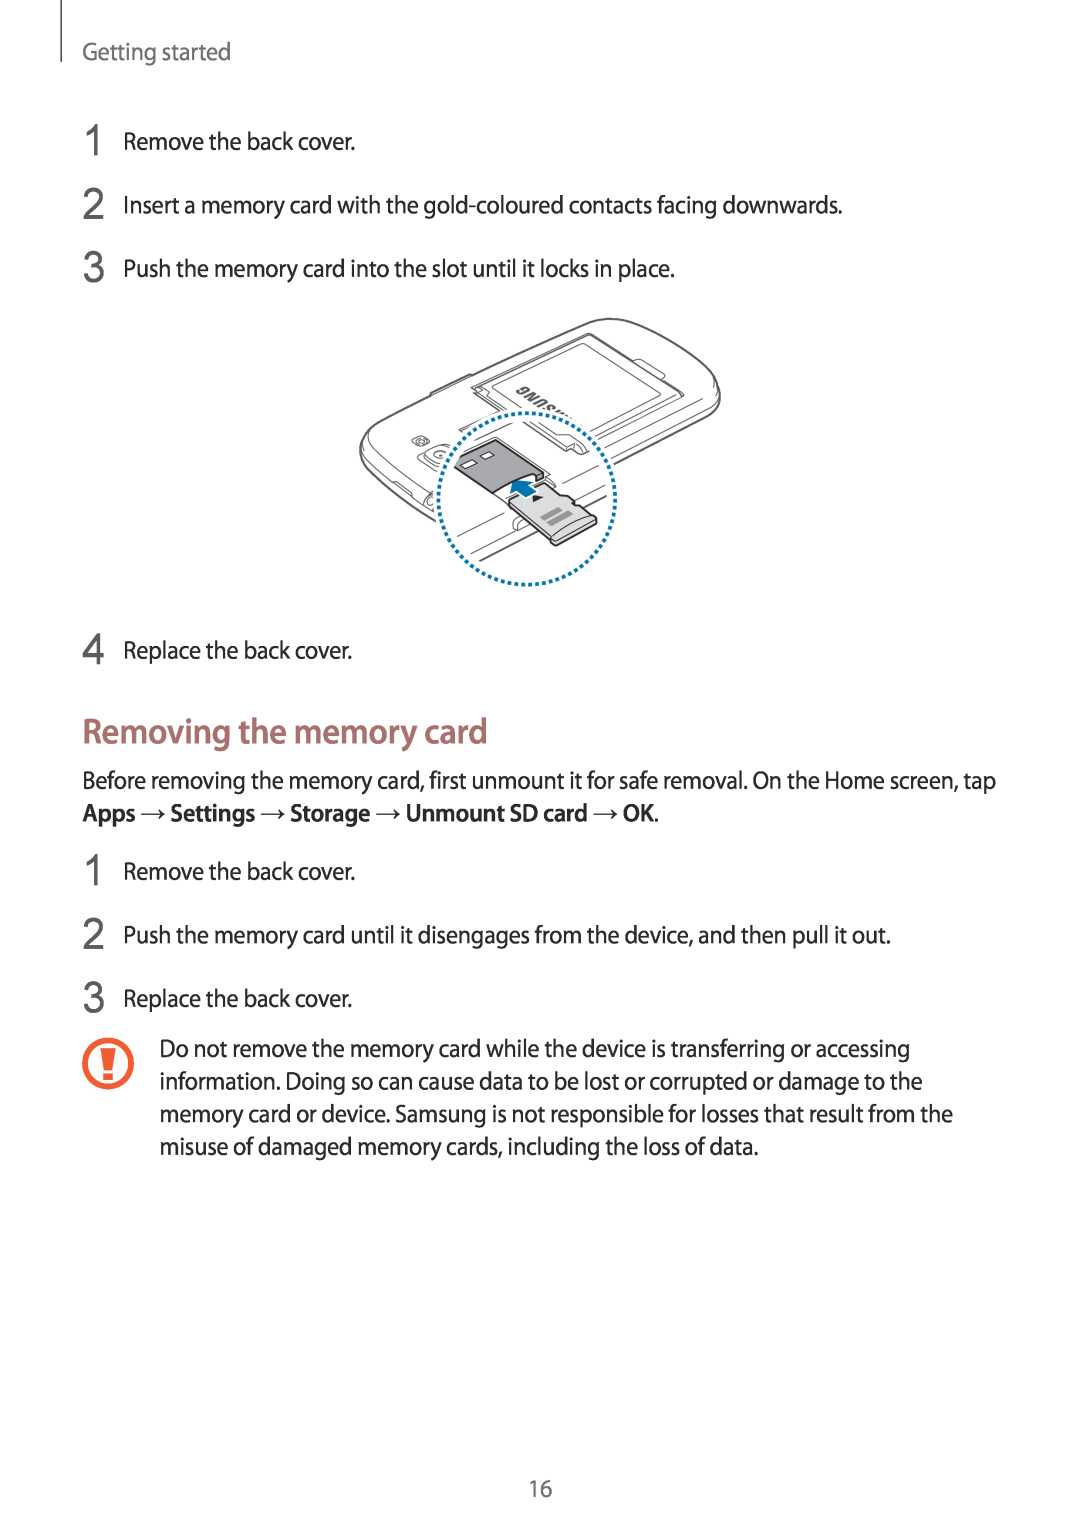 Samsung GT-I8730ZWATIM, GT-I8730TAAVGR, GT-I8730ZWAVD2, GT-I8730ZWAMEO manual Removing the memory card, Getting started 